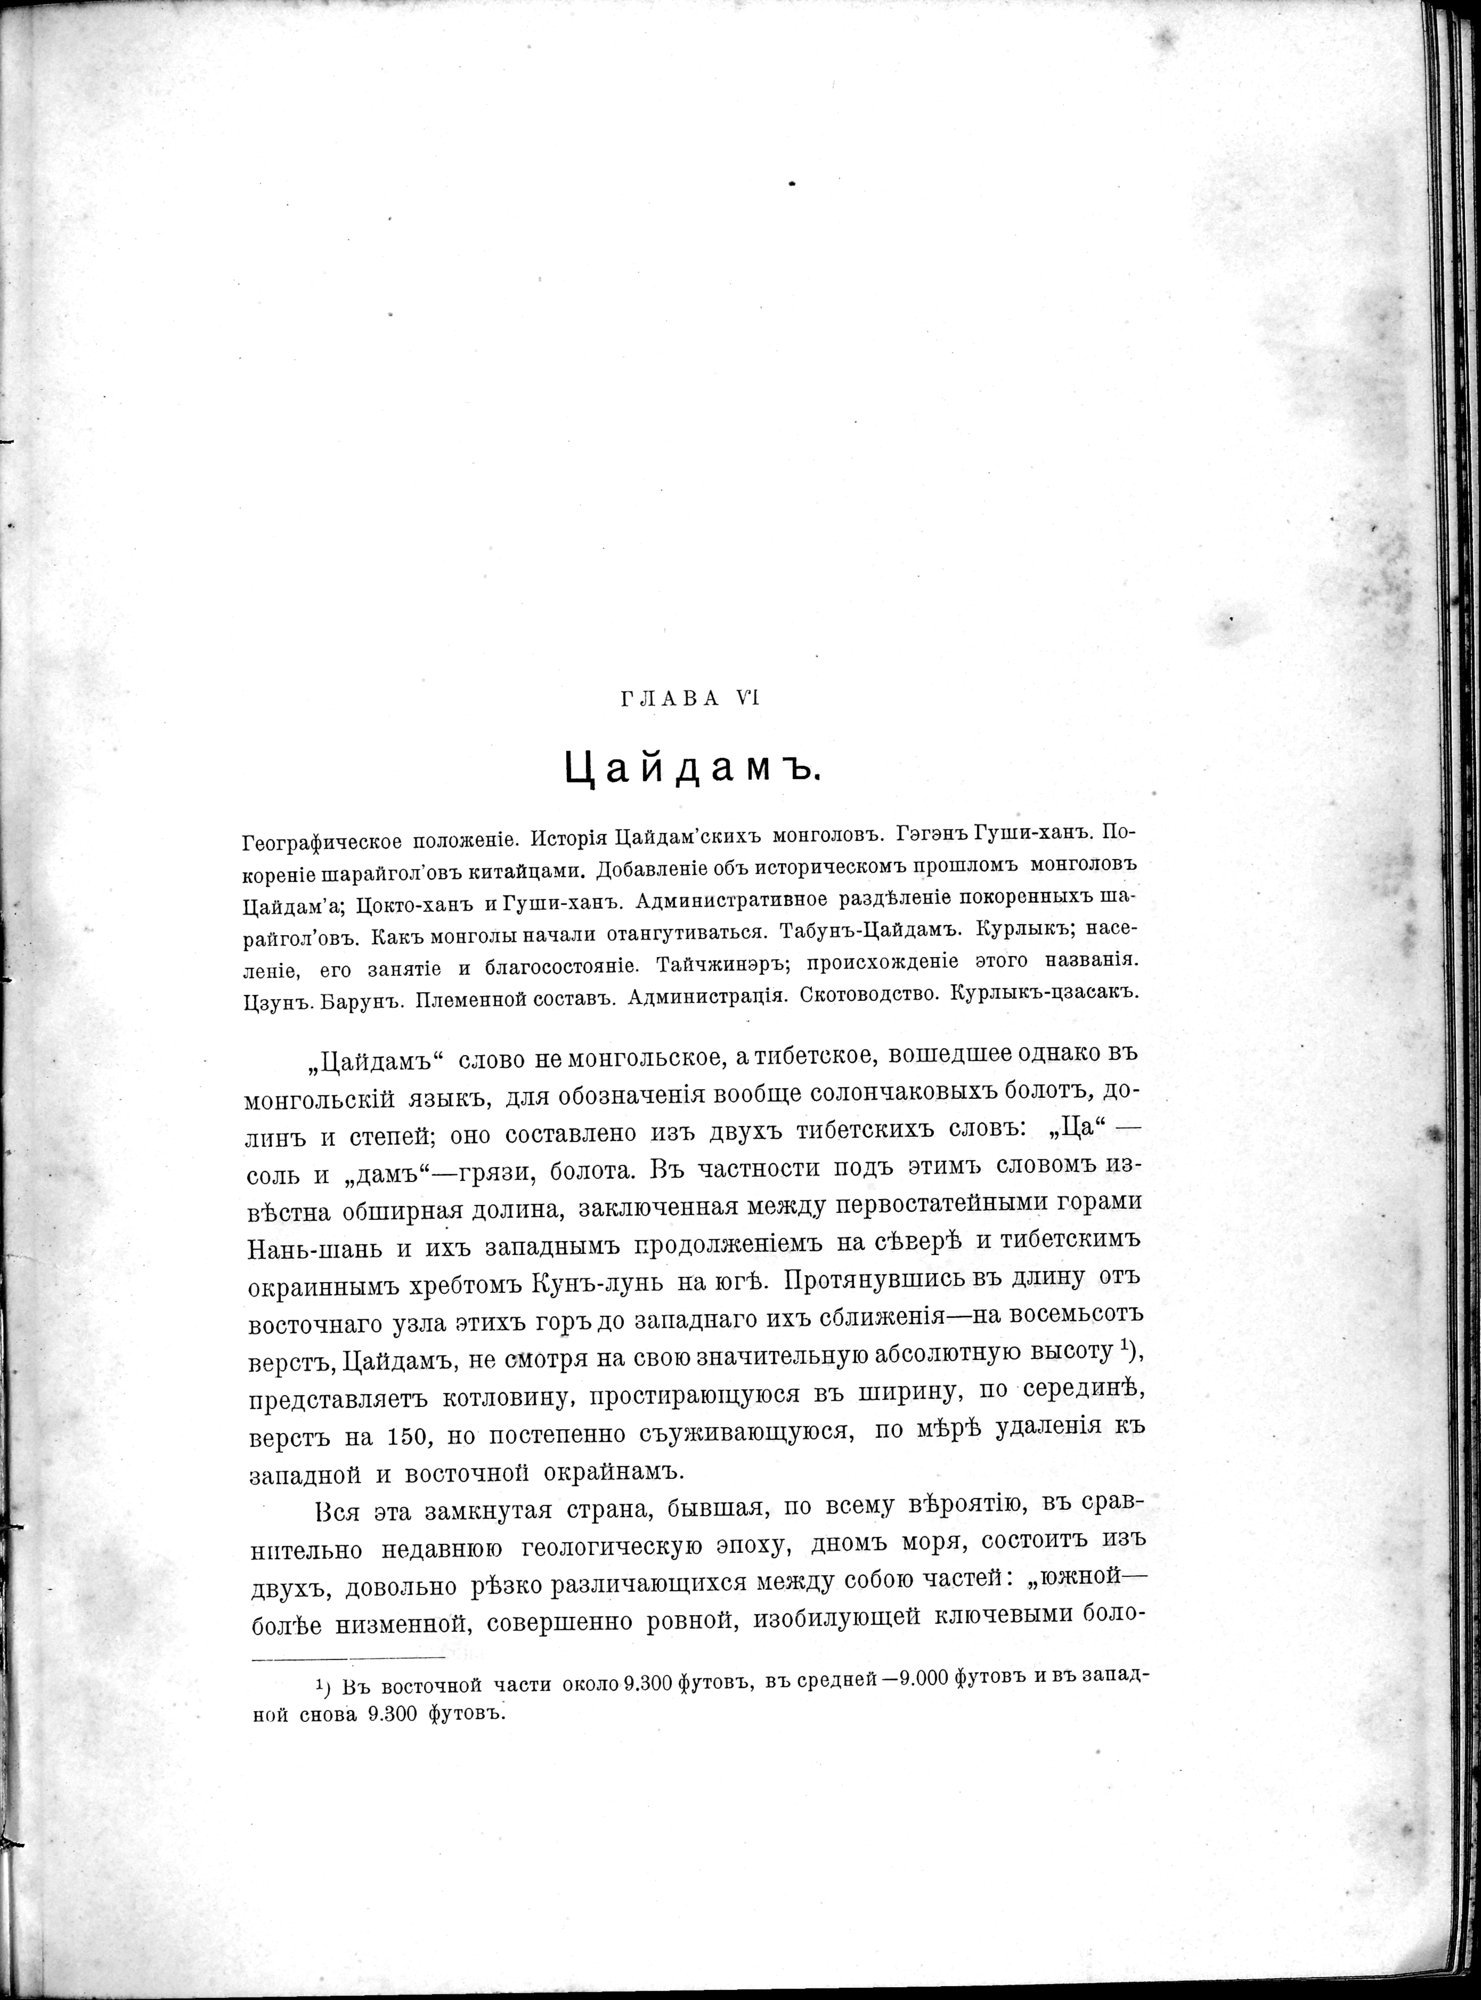 Mongoliia i Kam : vol.1 / Page 231 (Grayscale High Resolution Image)